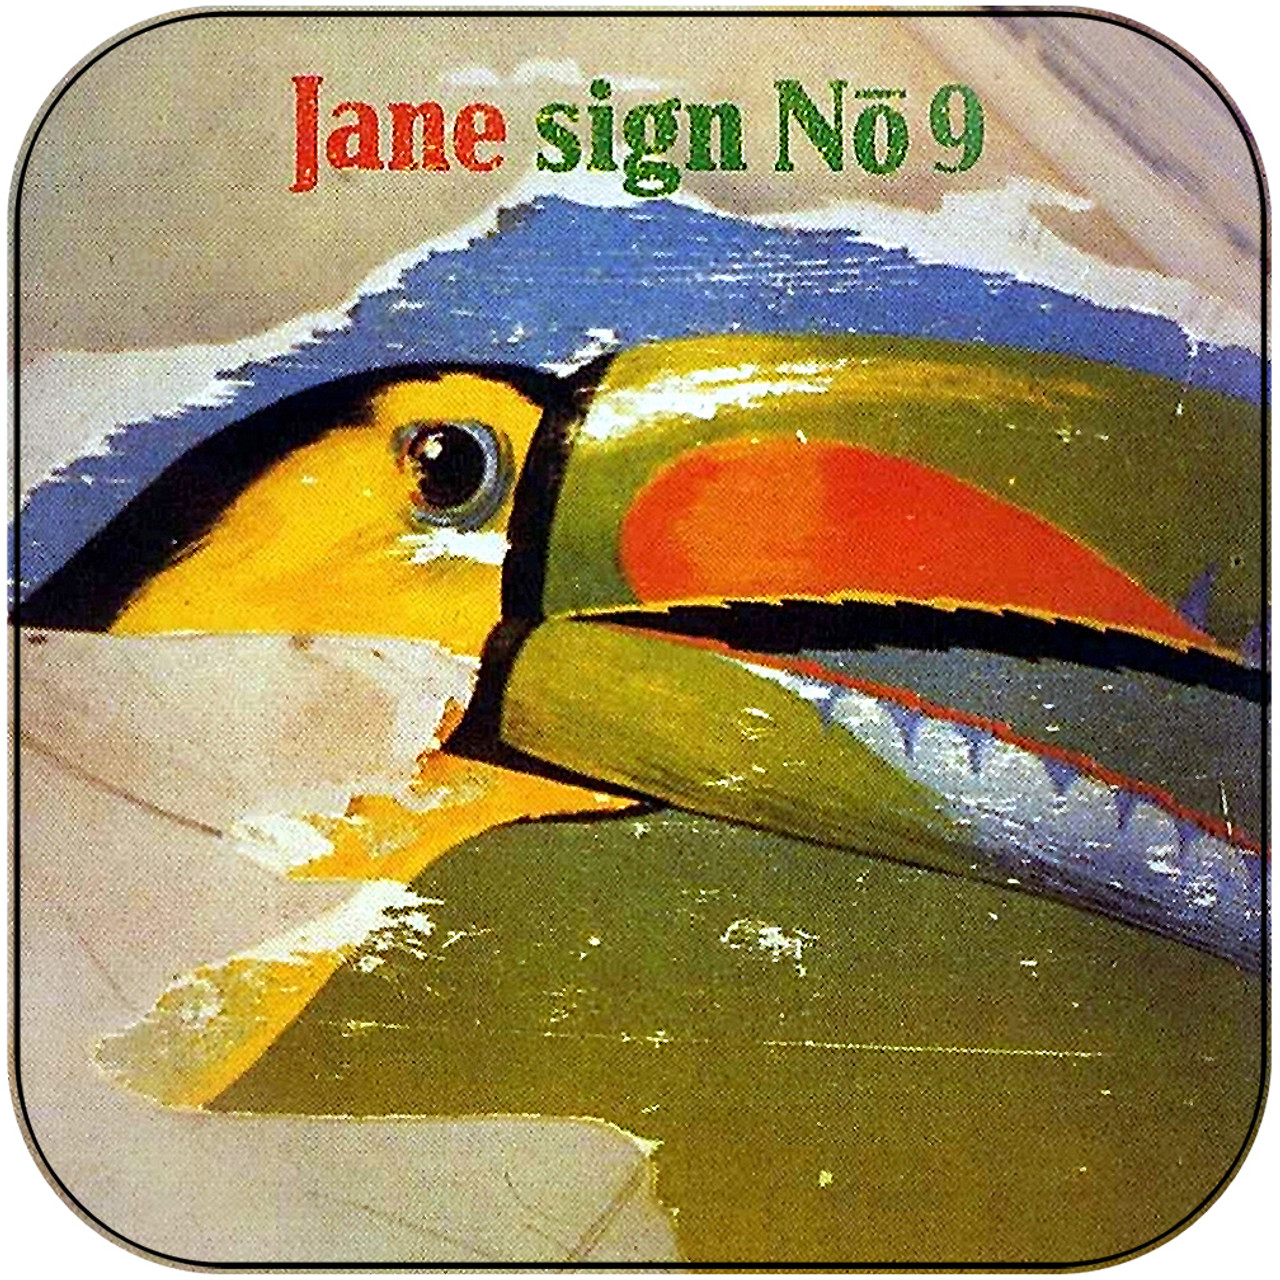 Jane - Sign 9 Album Cover Sticker